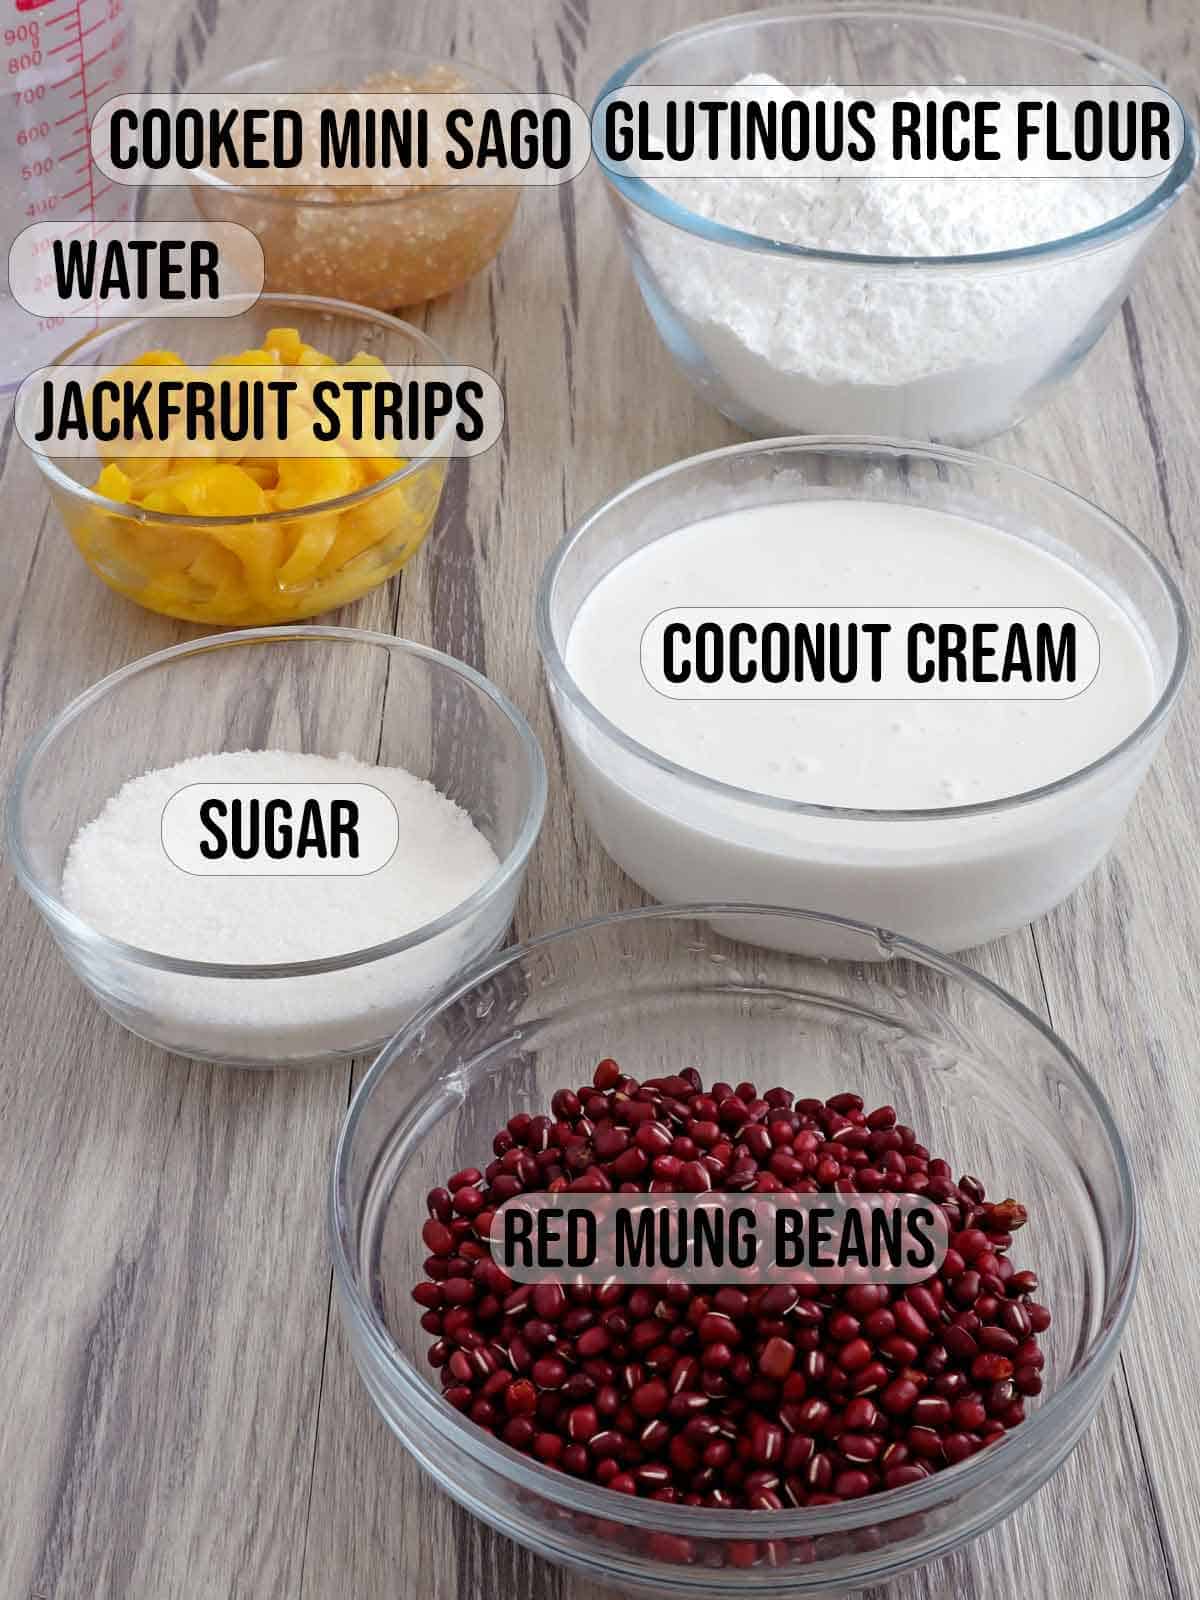 sugar, jackfruit strips, coconut cream, sago, water, glutinous rice flour, red mung beans in bowls.